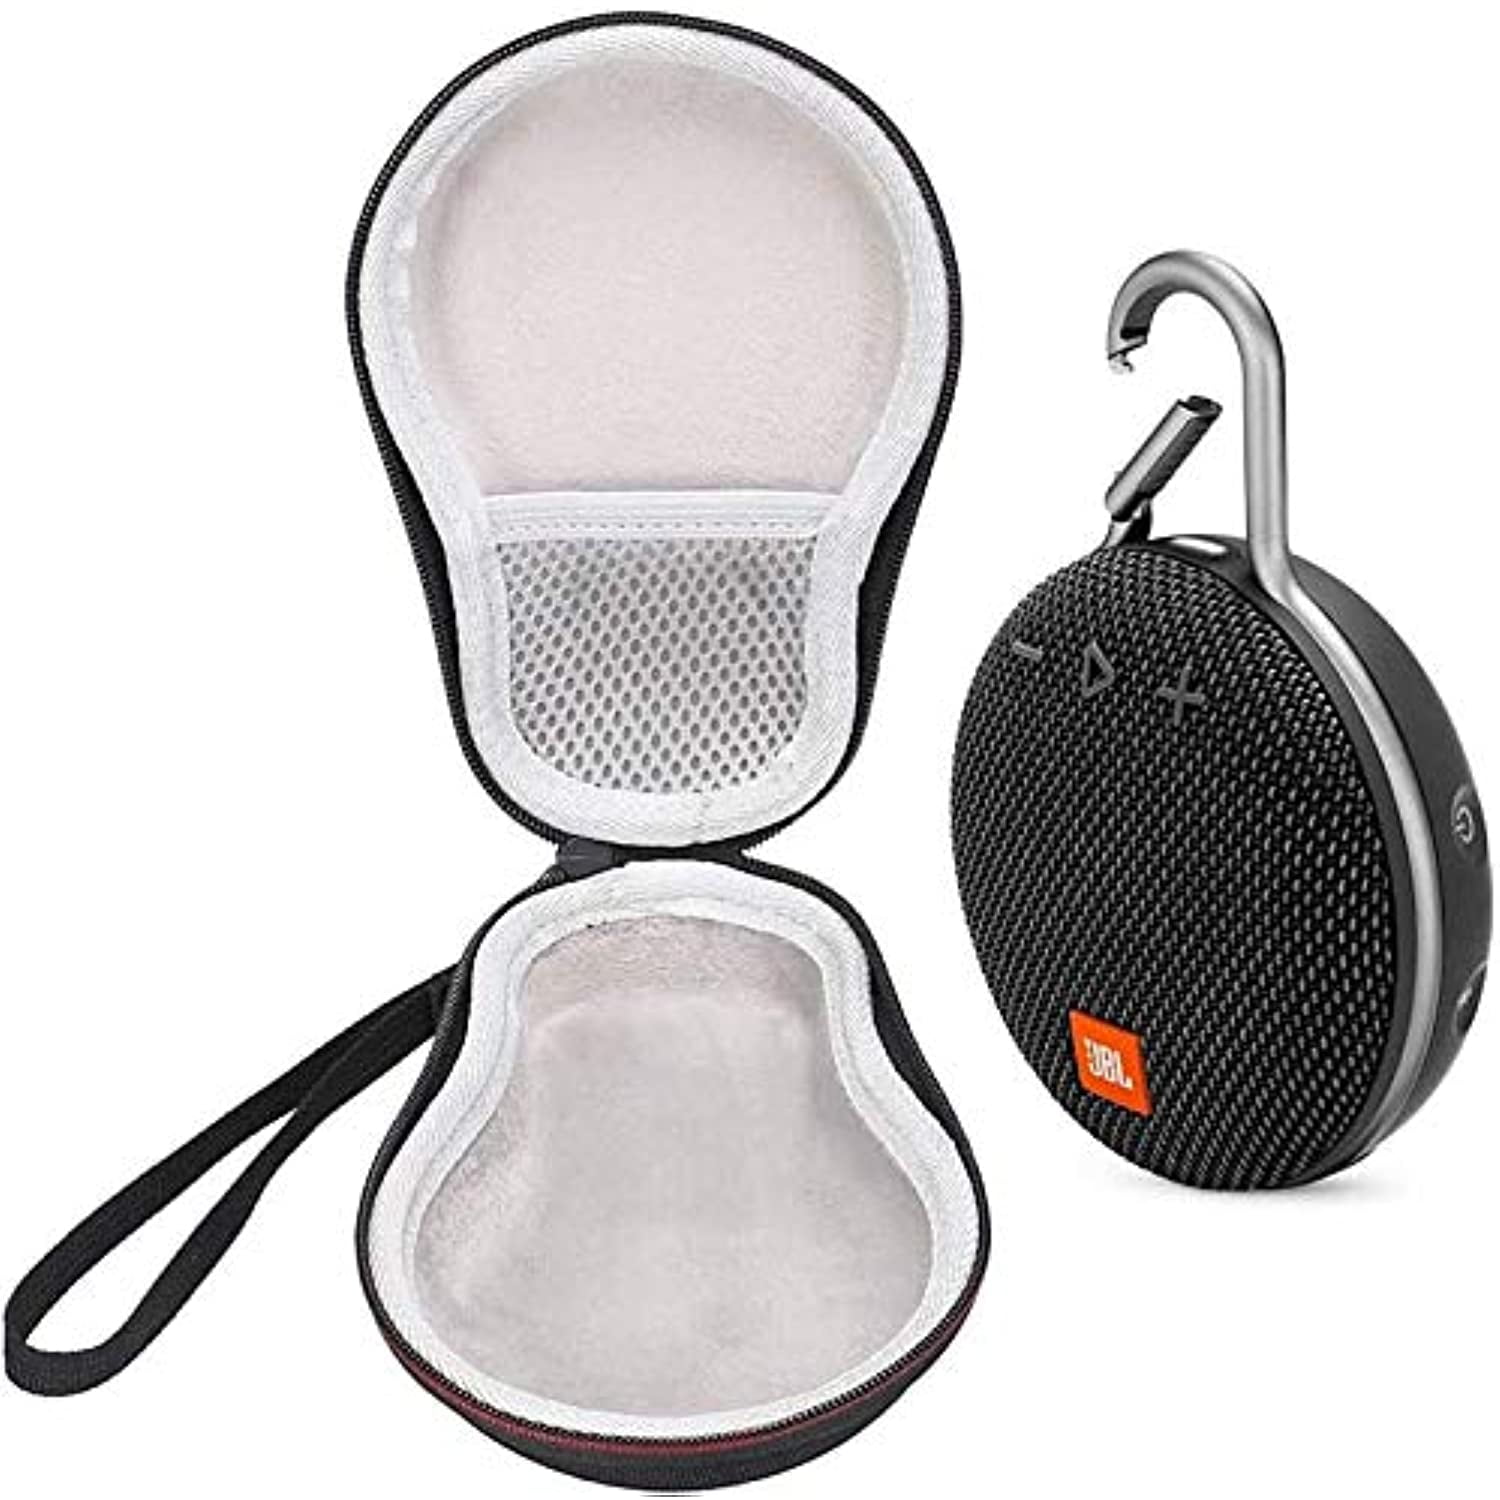 JBL Clip 3 IPX7 Waterproof Portable Bluetooth Speaker Bundle with Deluxe  Travel Case